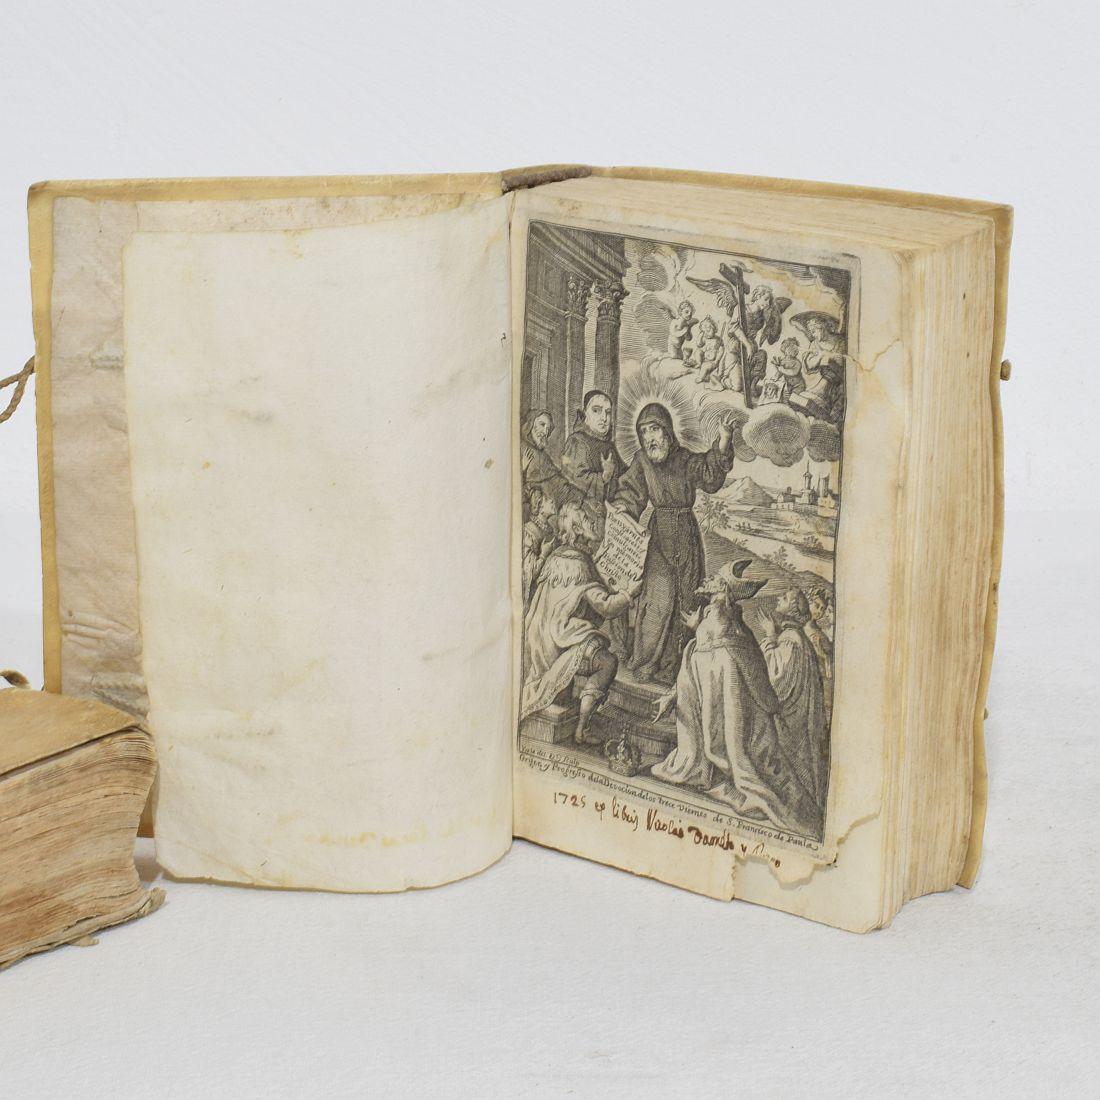 The Collective of 18th Century Weathered Spanish/ Italian Vellum Books (livres en vélin espagnol/italien du 18e siècle) 10